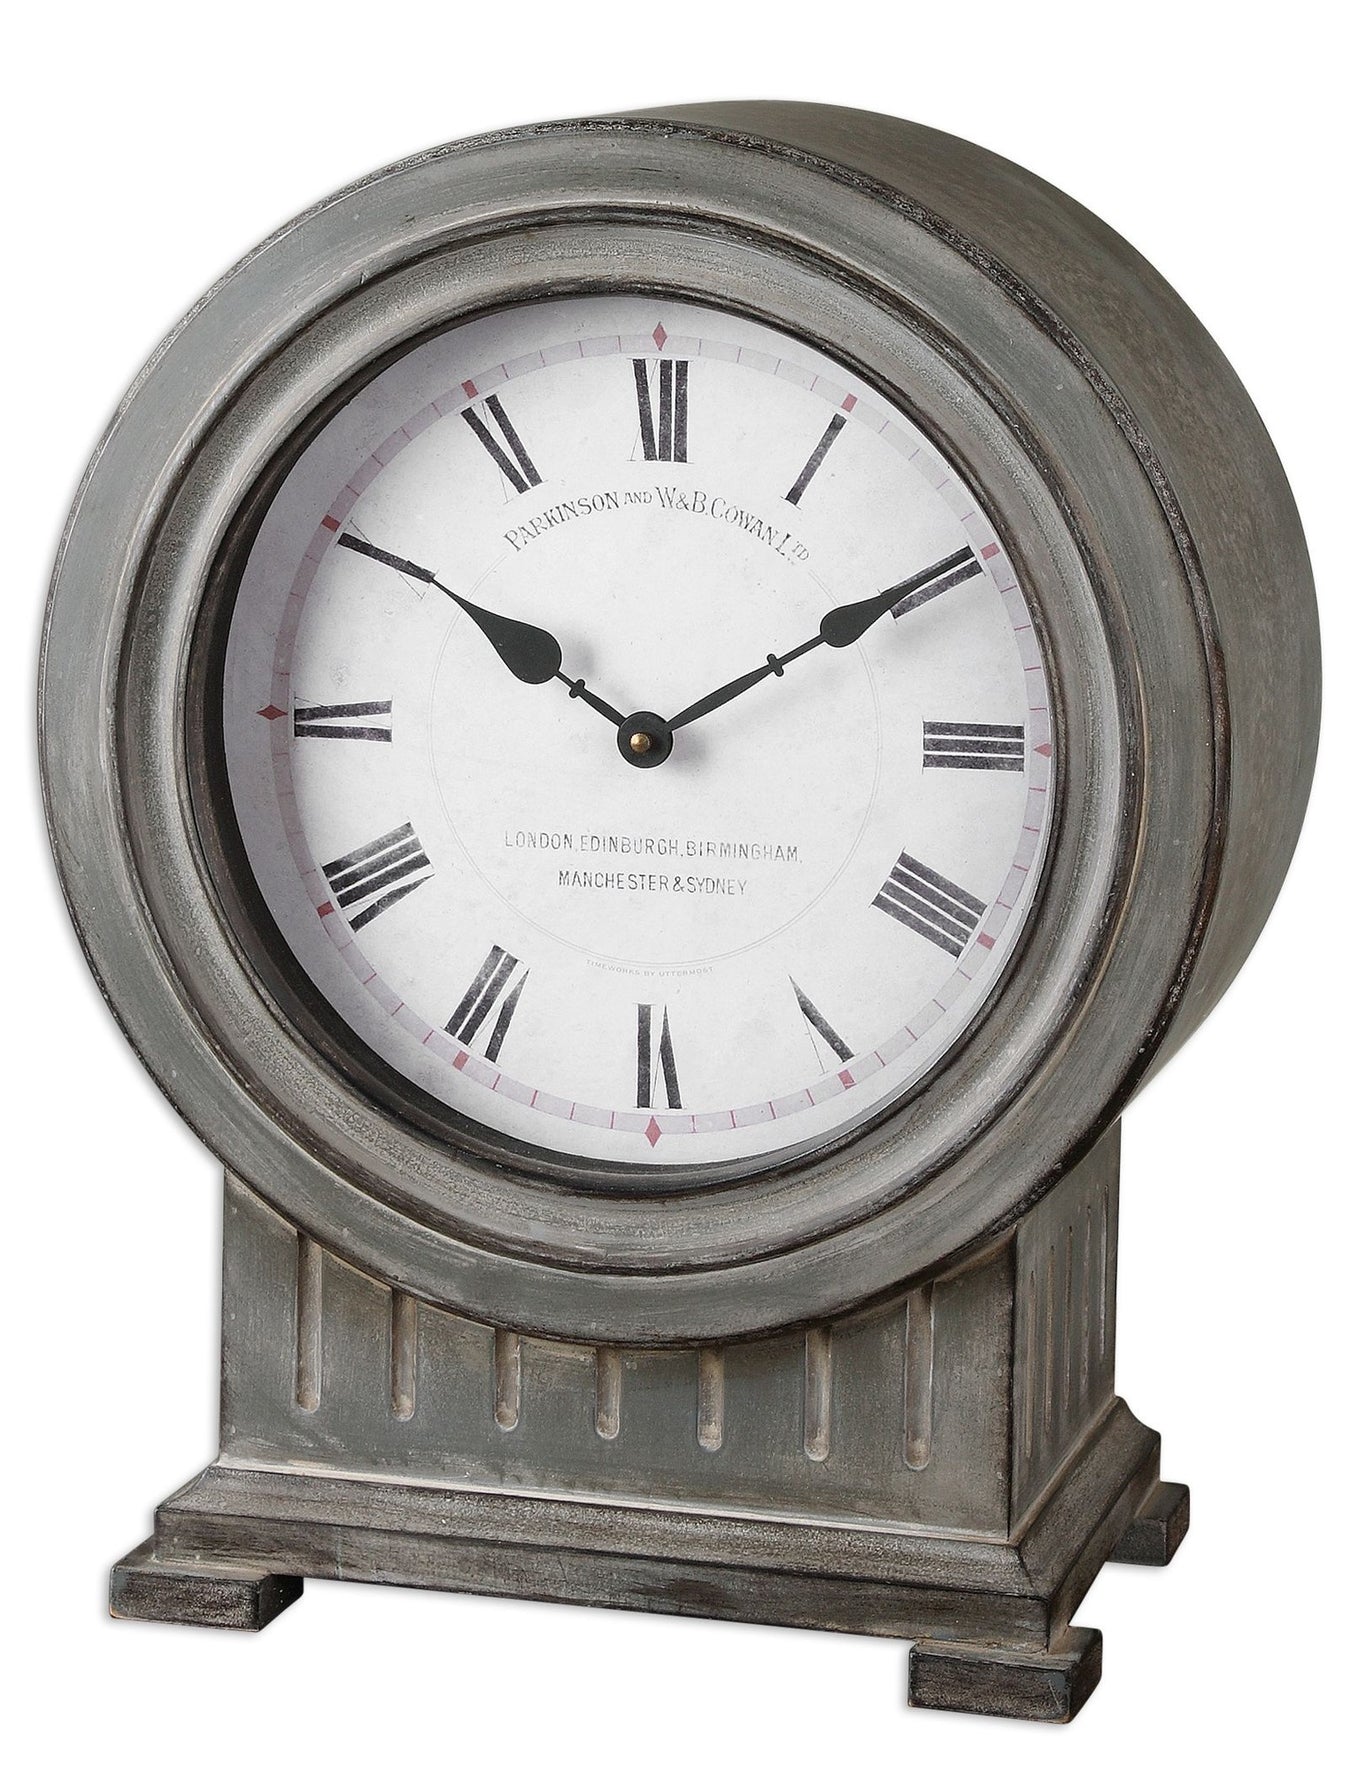 Uttermost Mantel and Tabletop Clocks